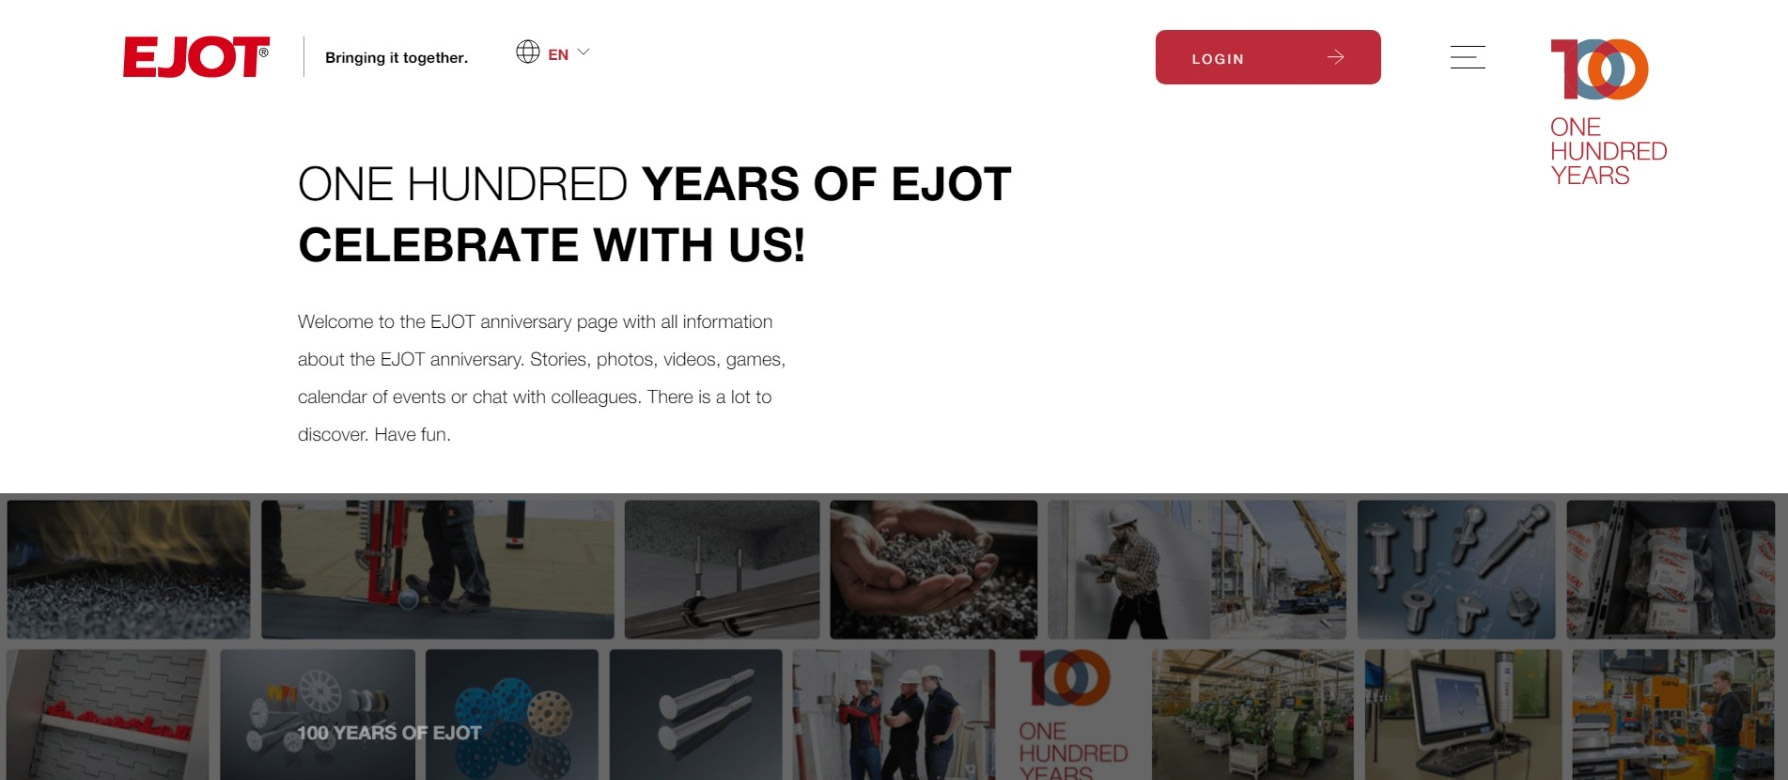 EJOT platform 100 years